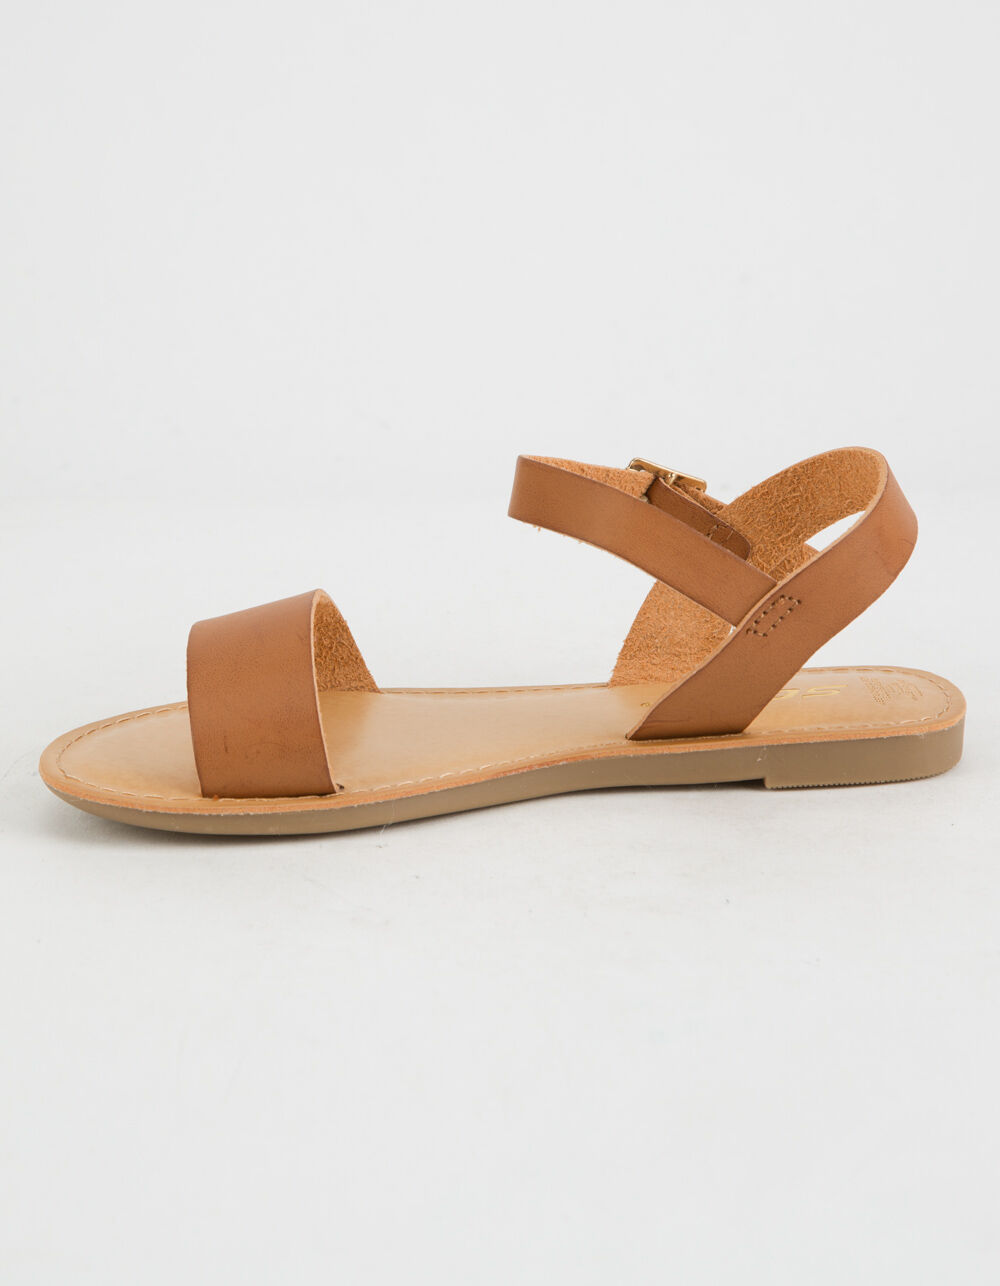 SODA Ankle Strap Girls Tan Sandals - TAN | Tillys